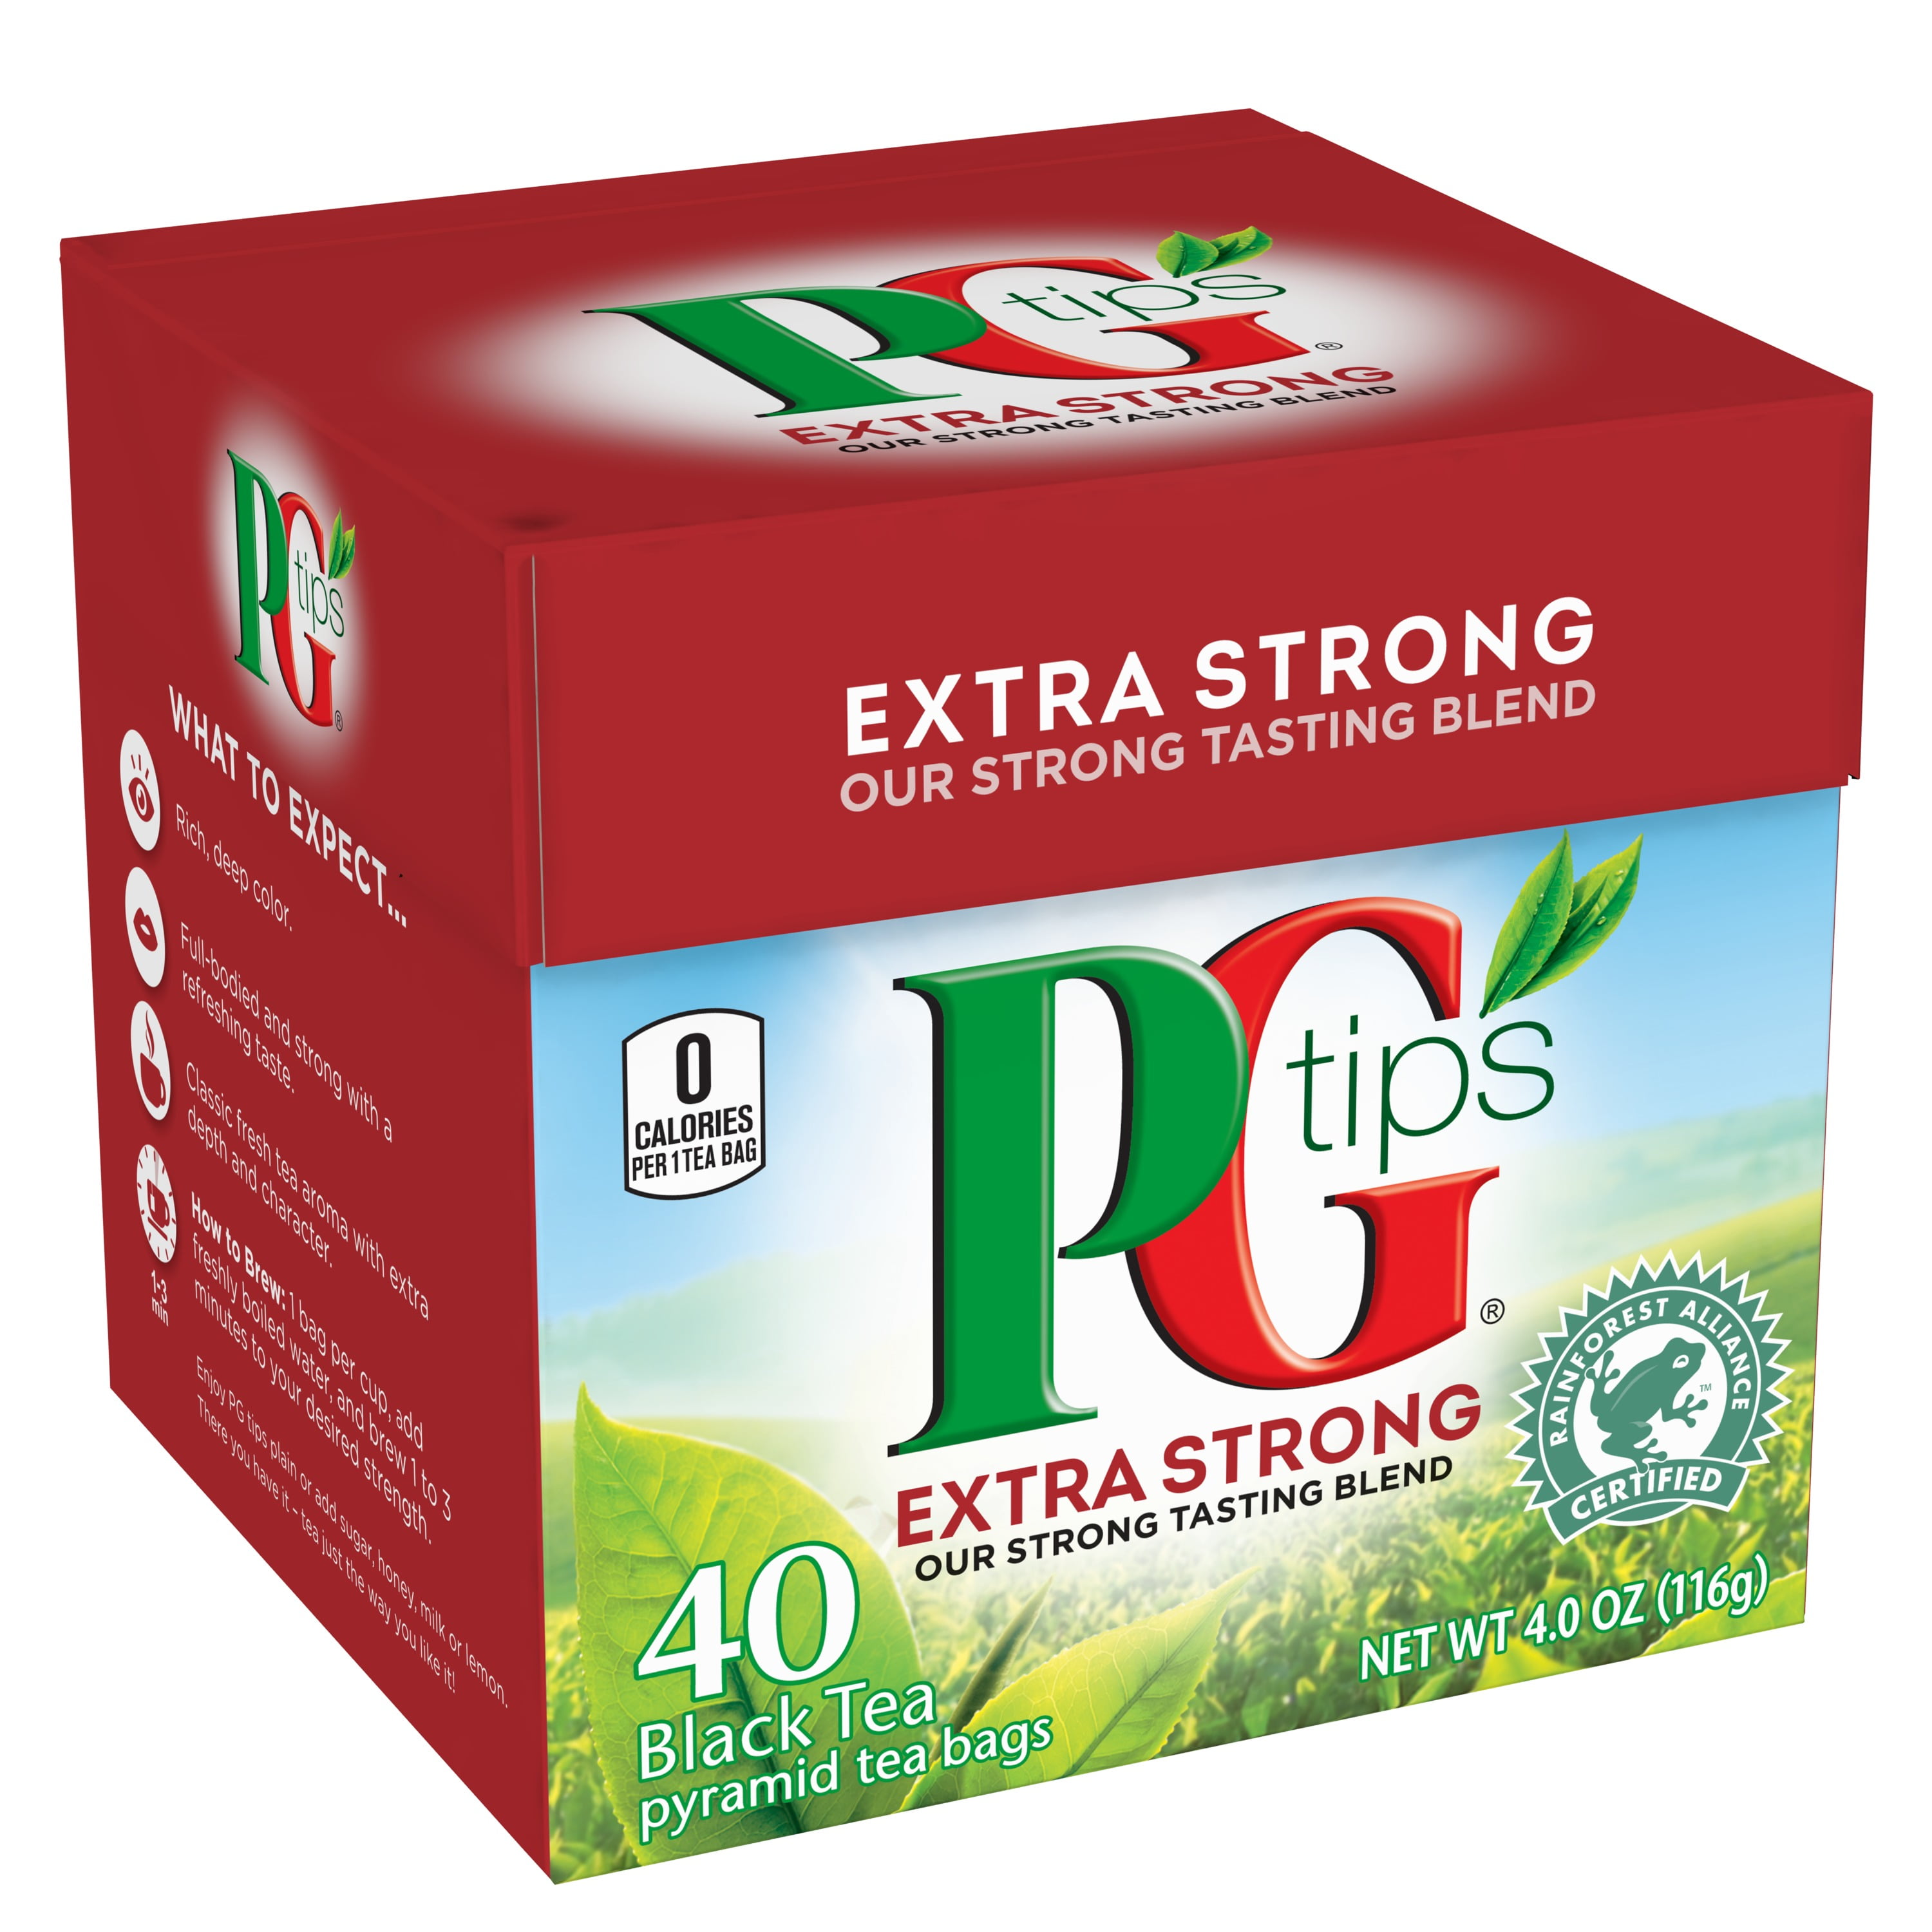  PG Tips Premium Black Tea, Pyramid Bags, 80 ct